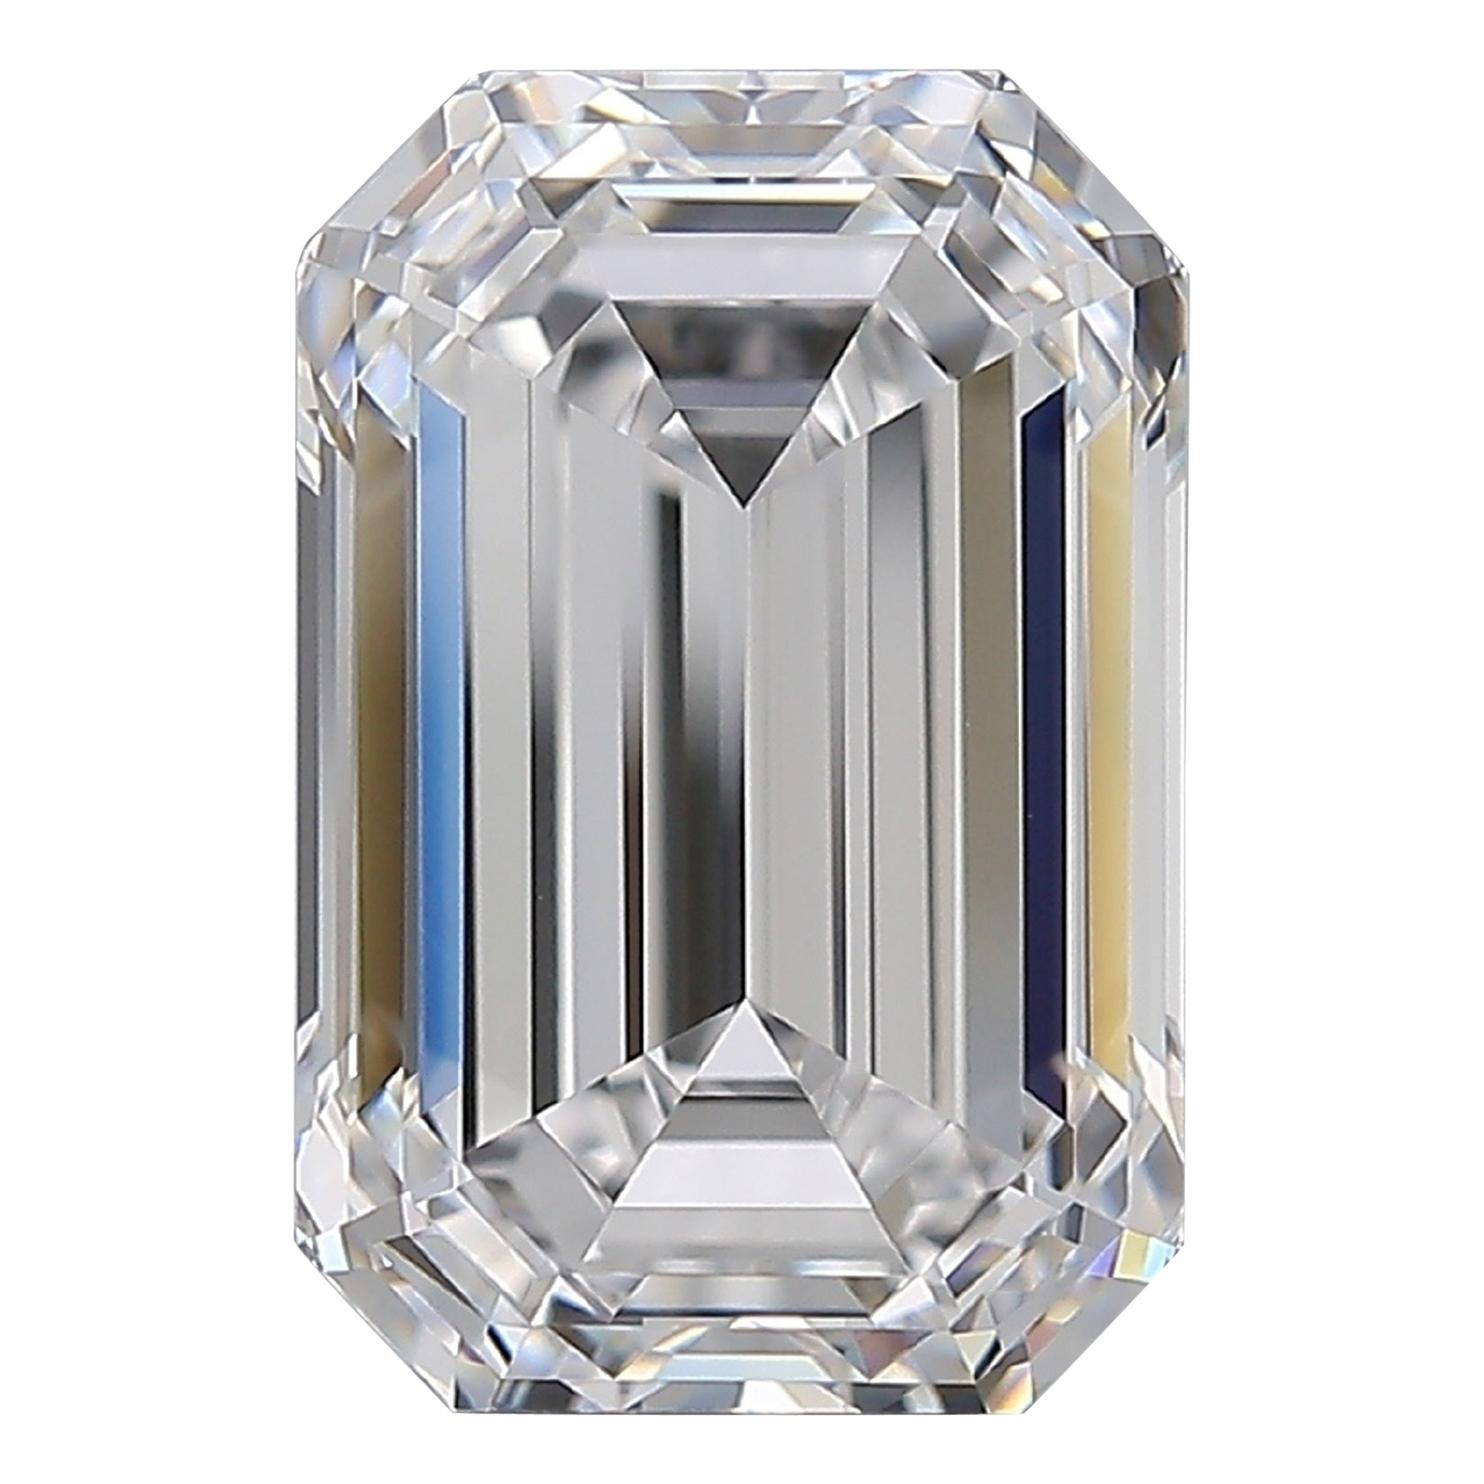 Flawless D Color GIA Certified 5.13 Carat Emerald Cut Diamond